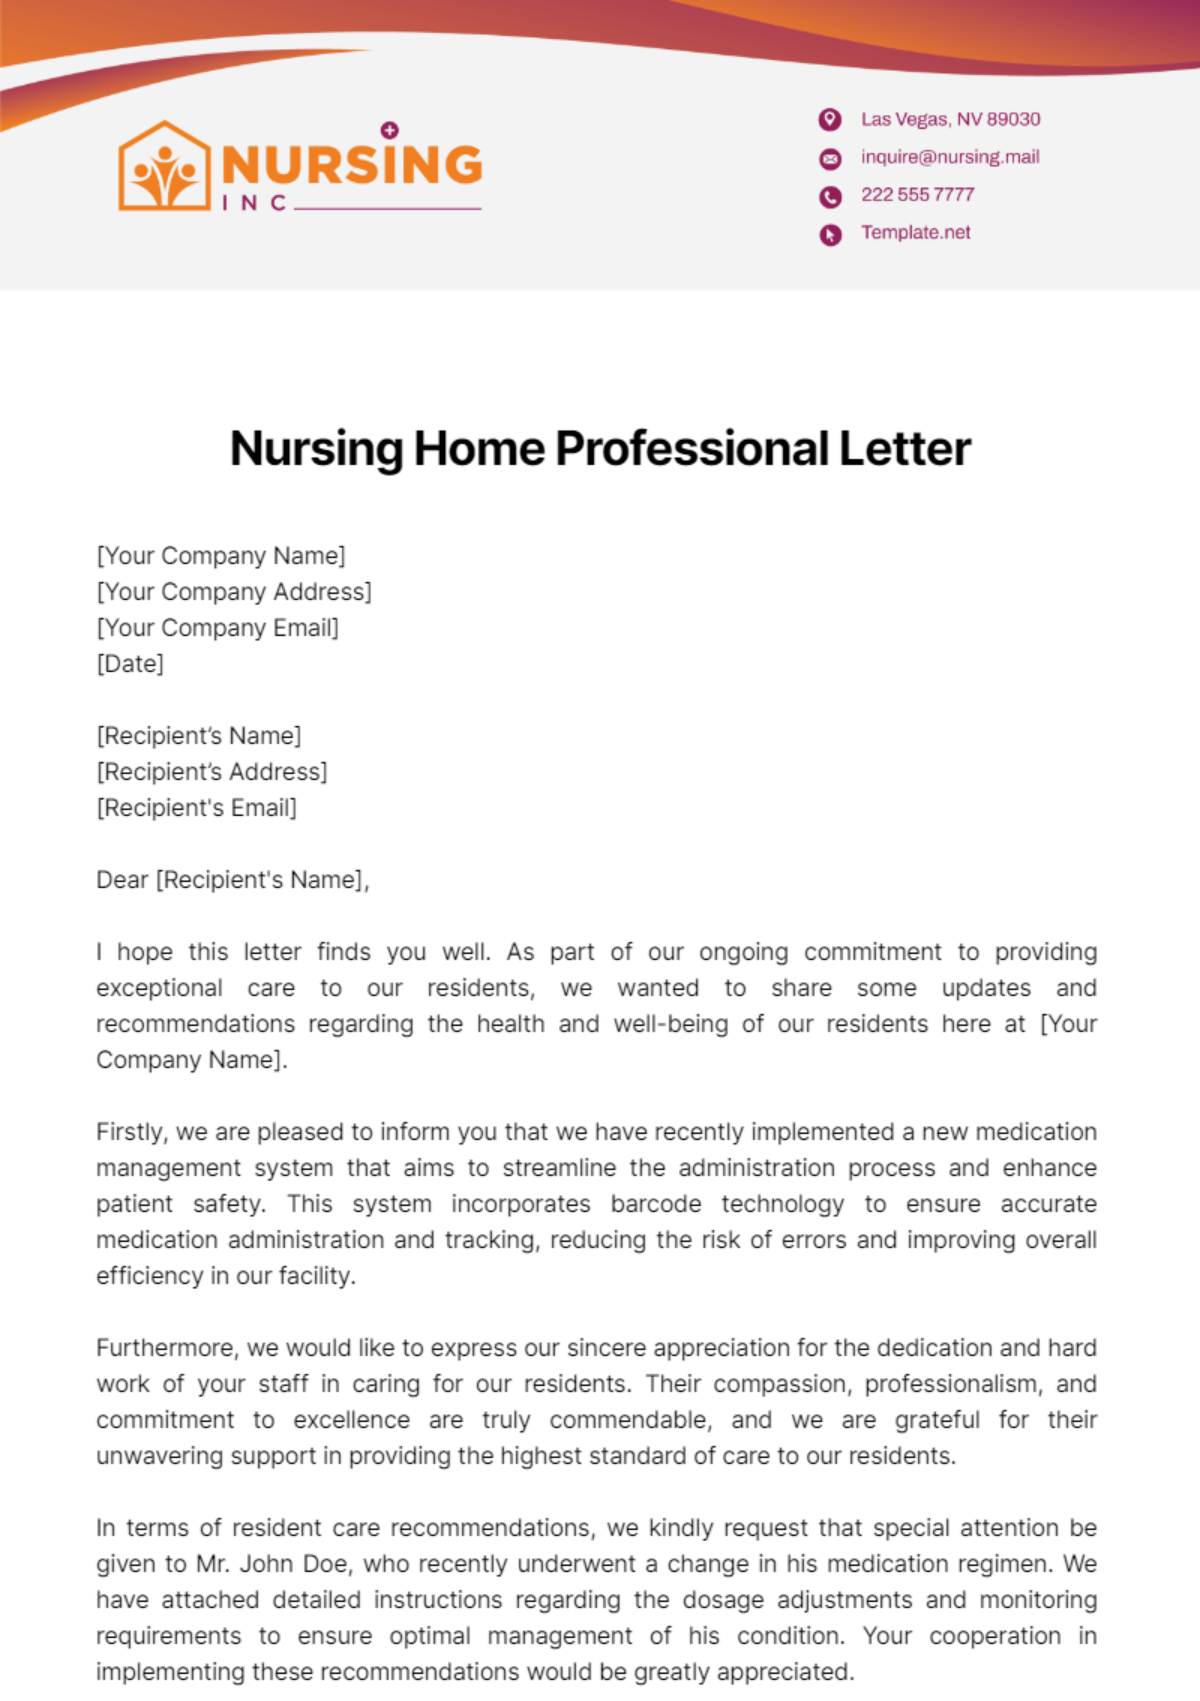 Nursing Home Professional Letter Template